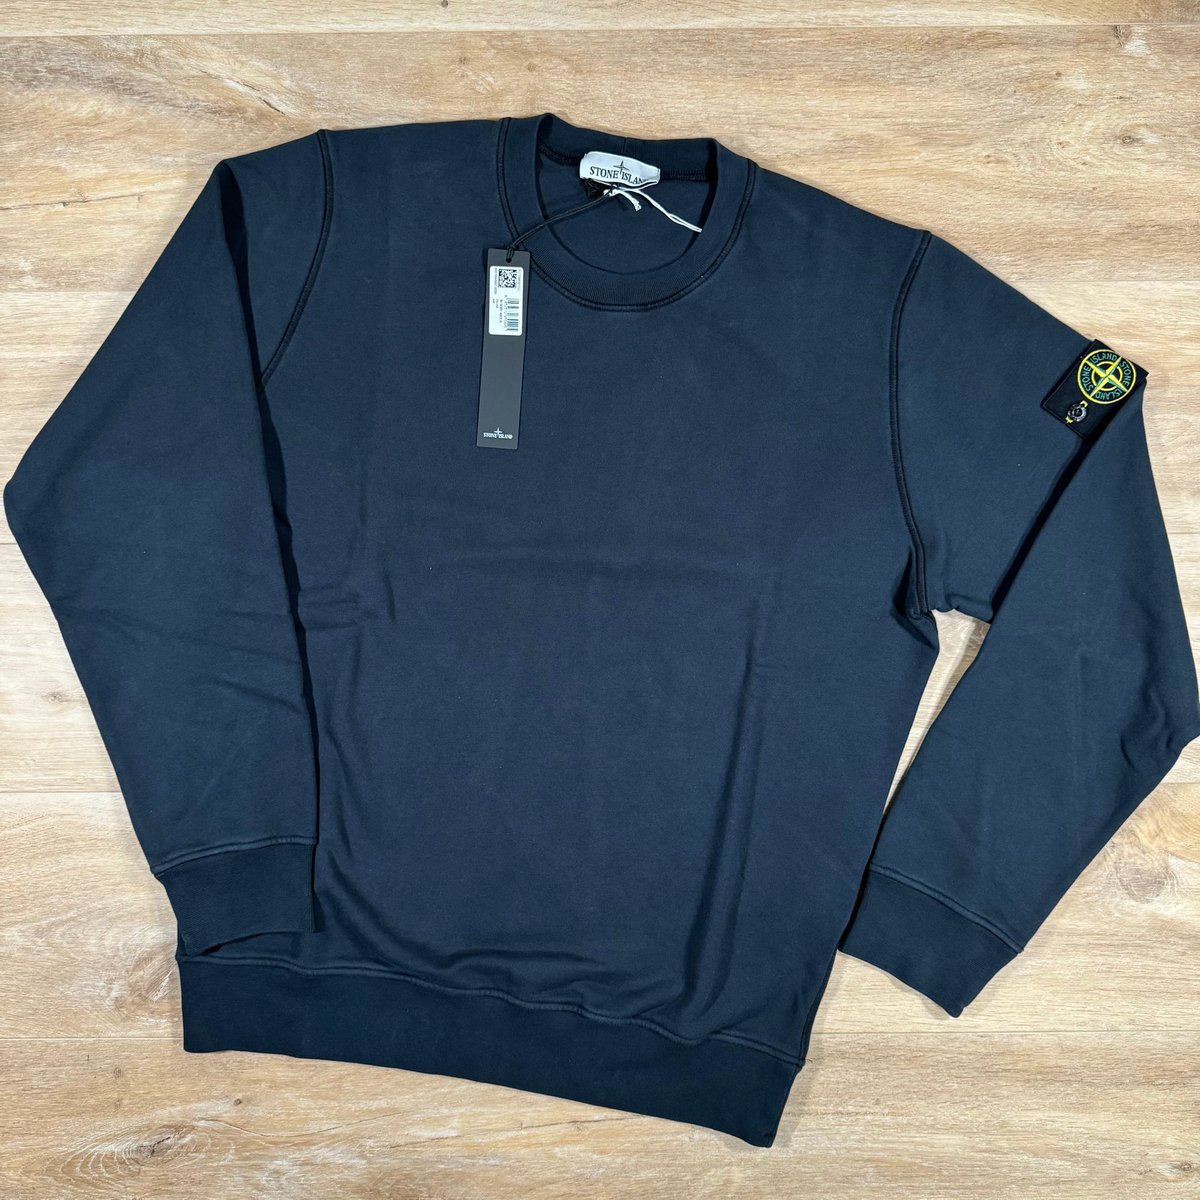 £55 off Stone Island sweatshirts! BUY 👉🏼 Kieran shared Stone Island Crewneck Sweatshirt in Navy with you label-menswear.com/products/stone…